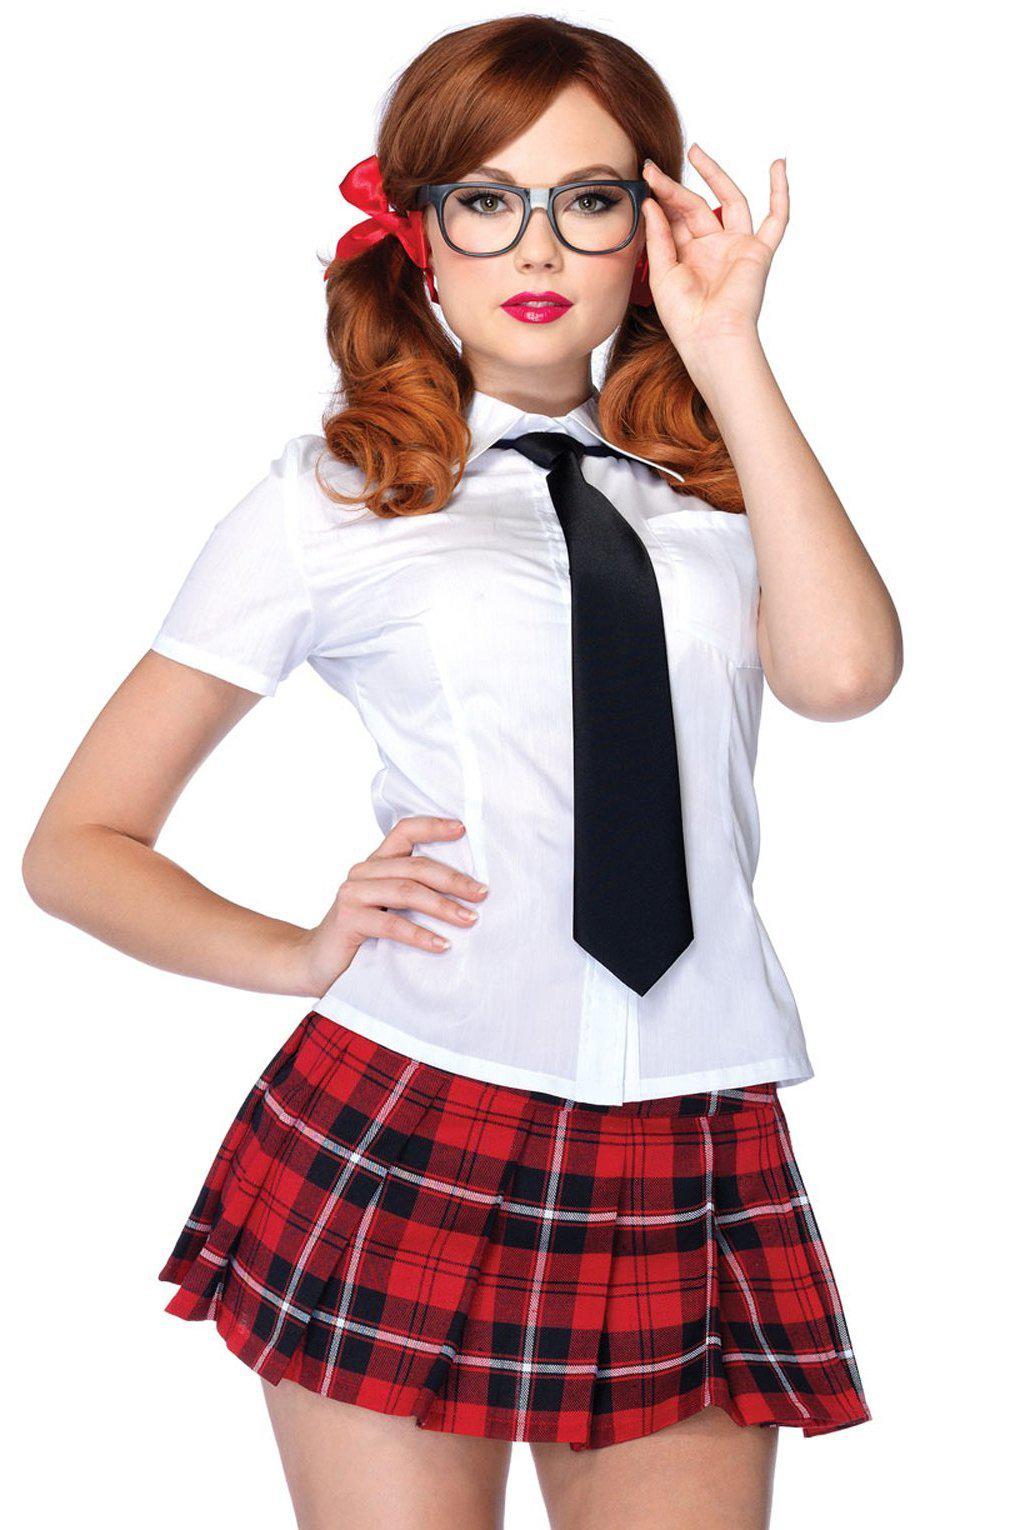 Private School Sweetie Costume-School Girl Costumes-Leg Avenue-SEXYSHOES.COM